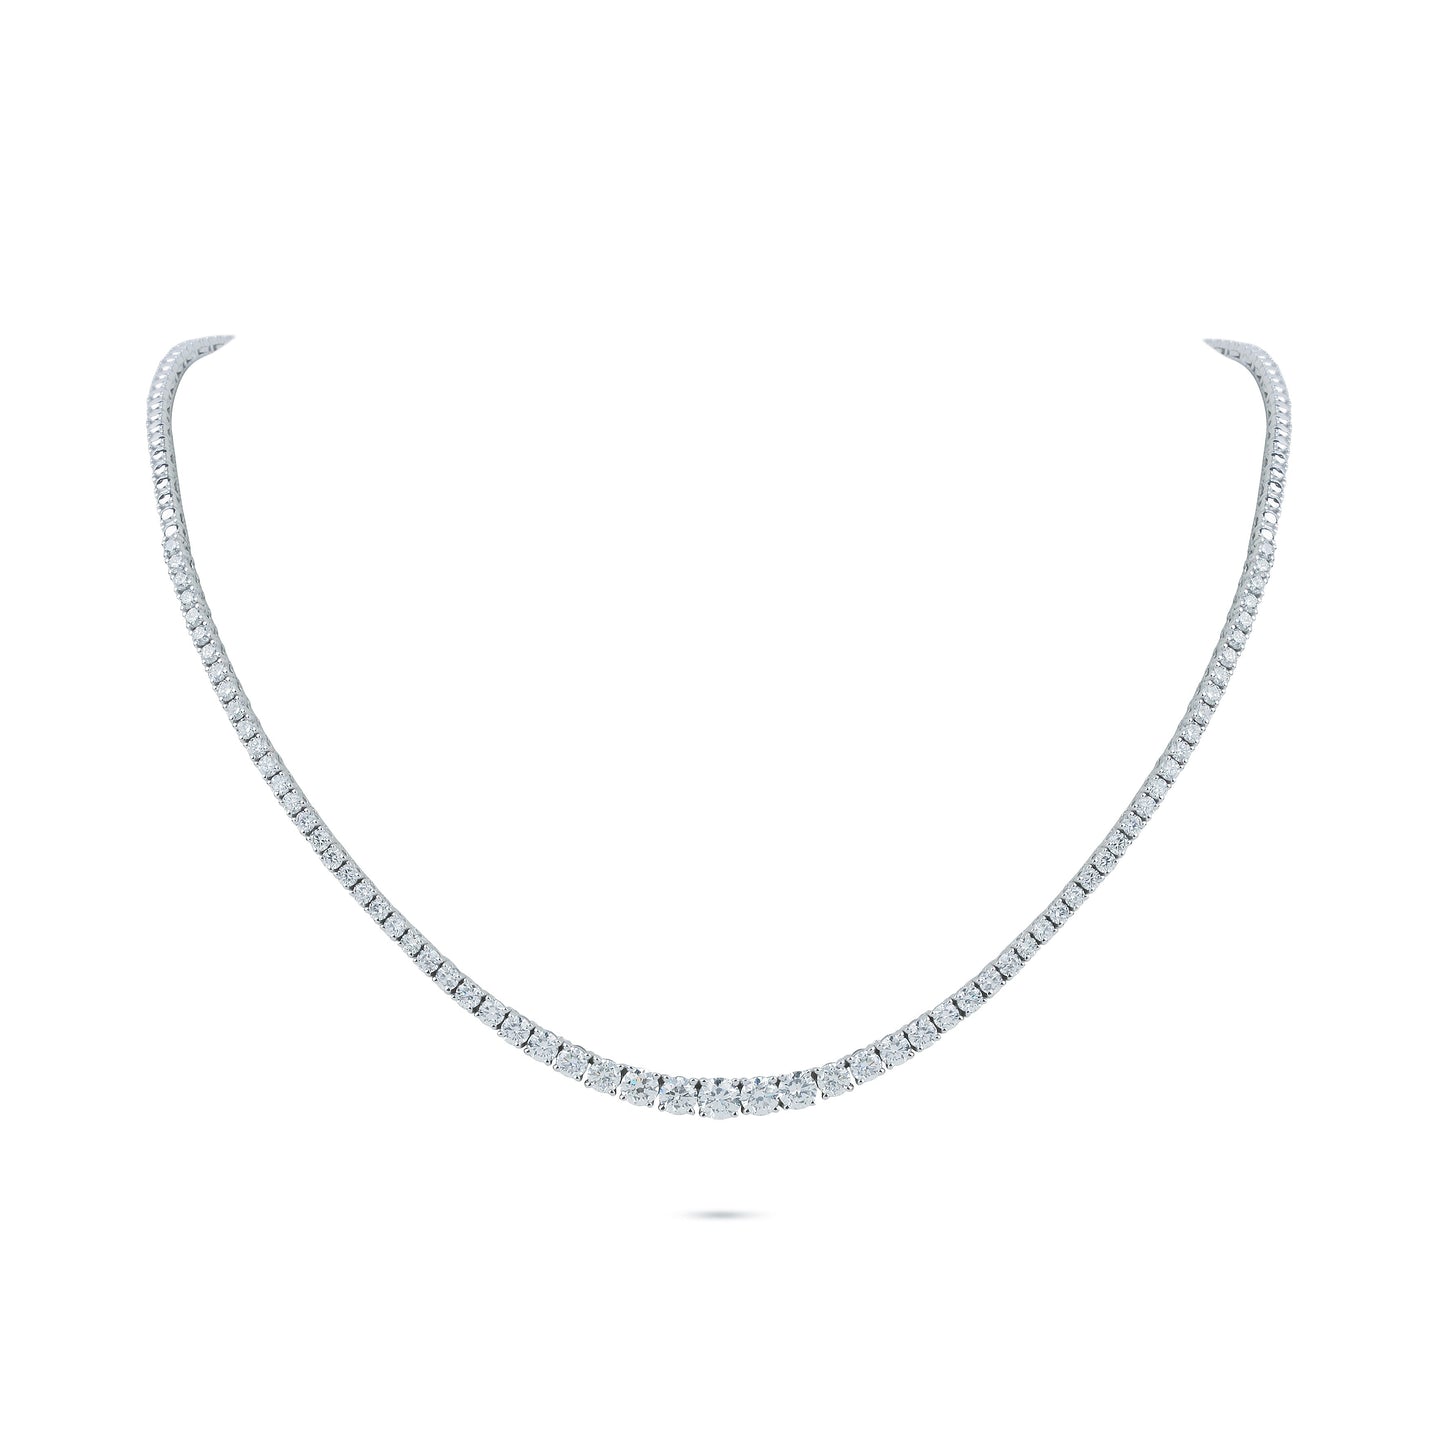 4.94 Carats Diamond Tennis Necklace